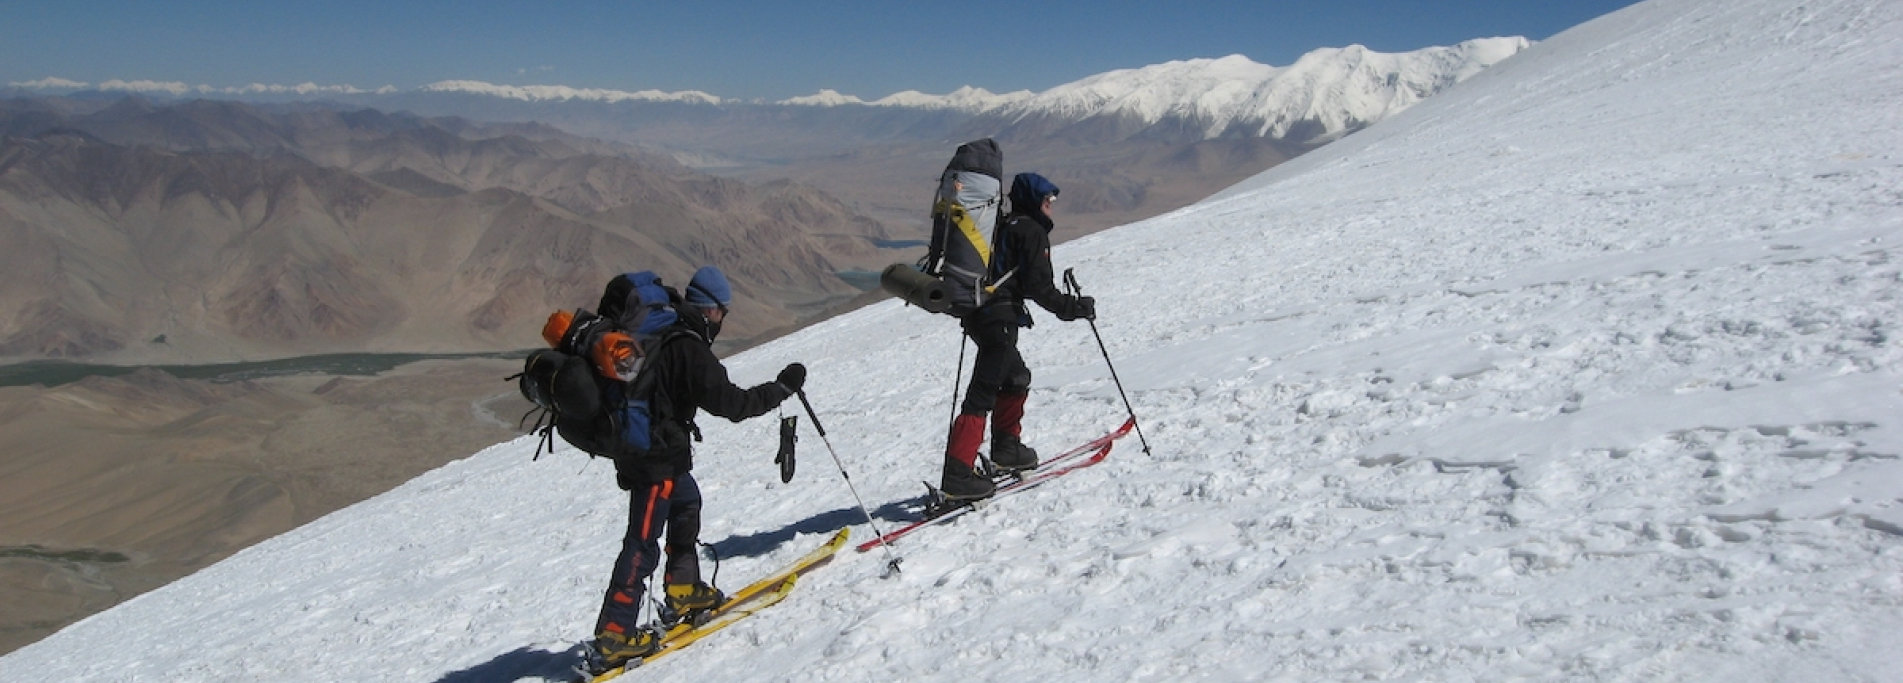 Muztagh-Ata peak 7546m - Ascent with skis